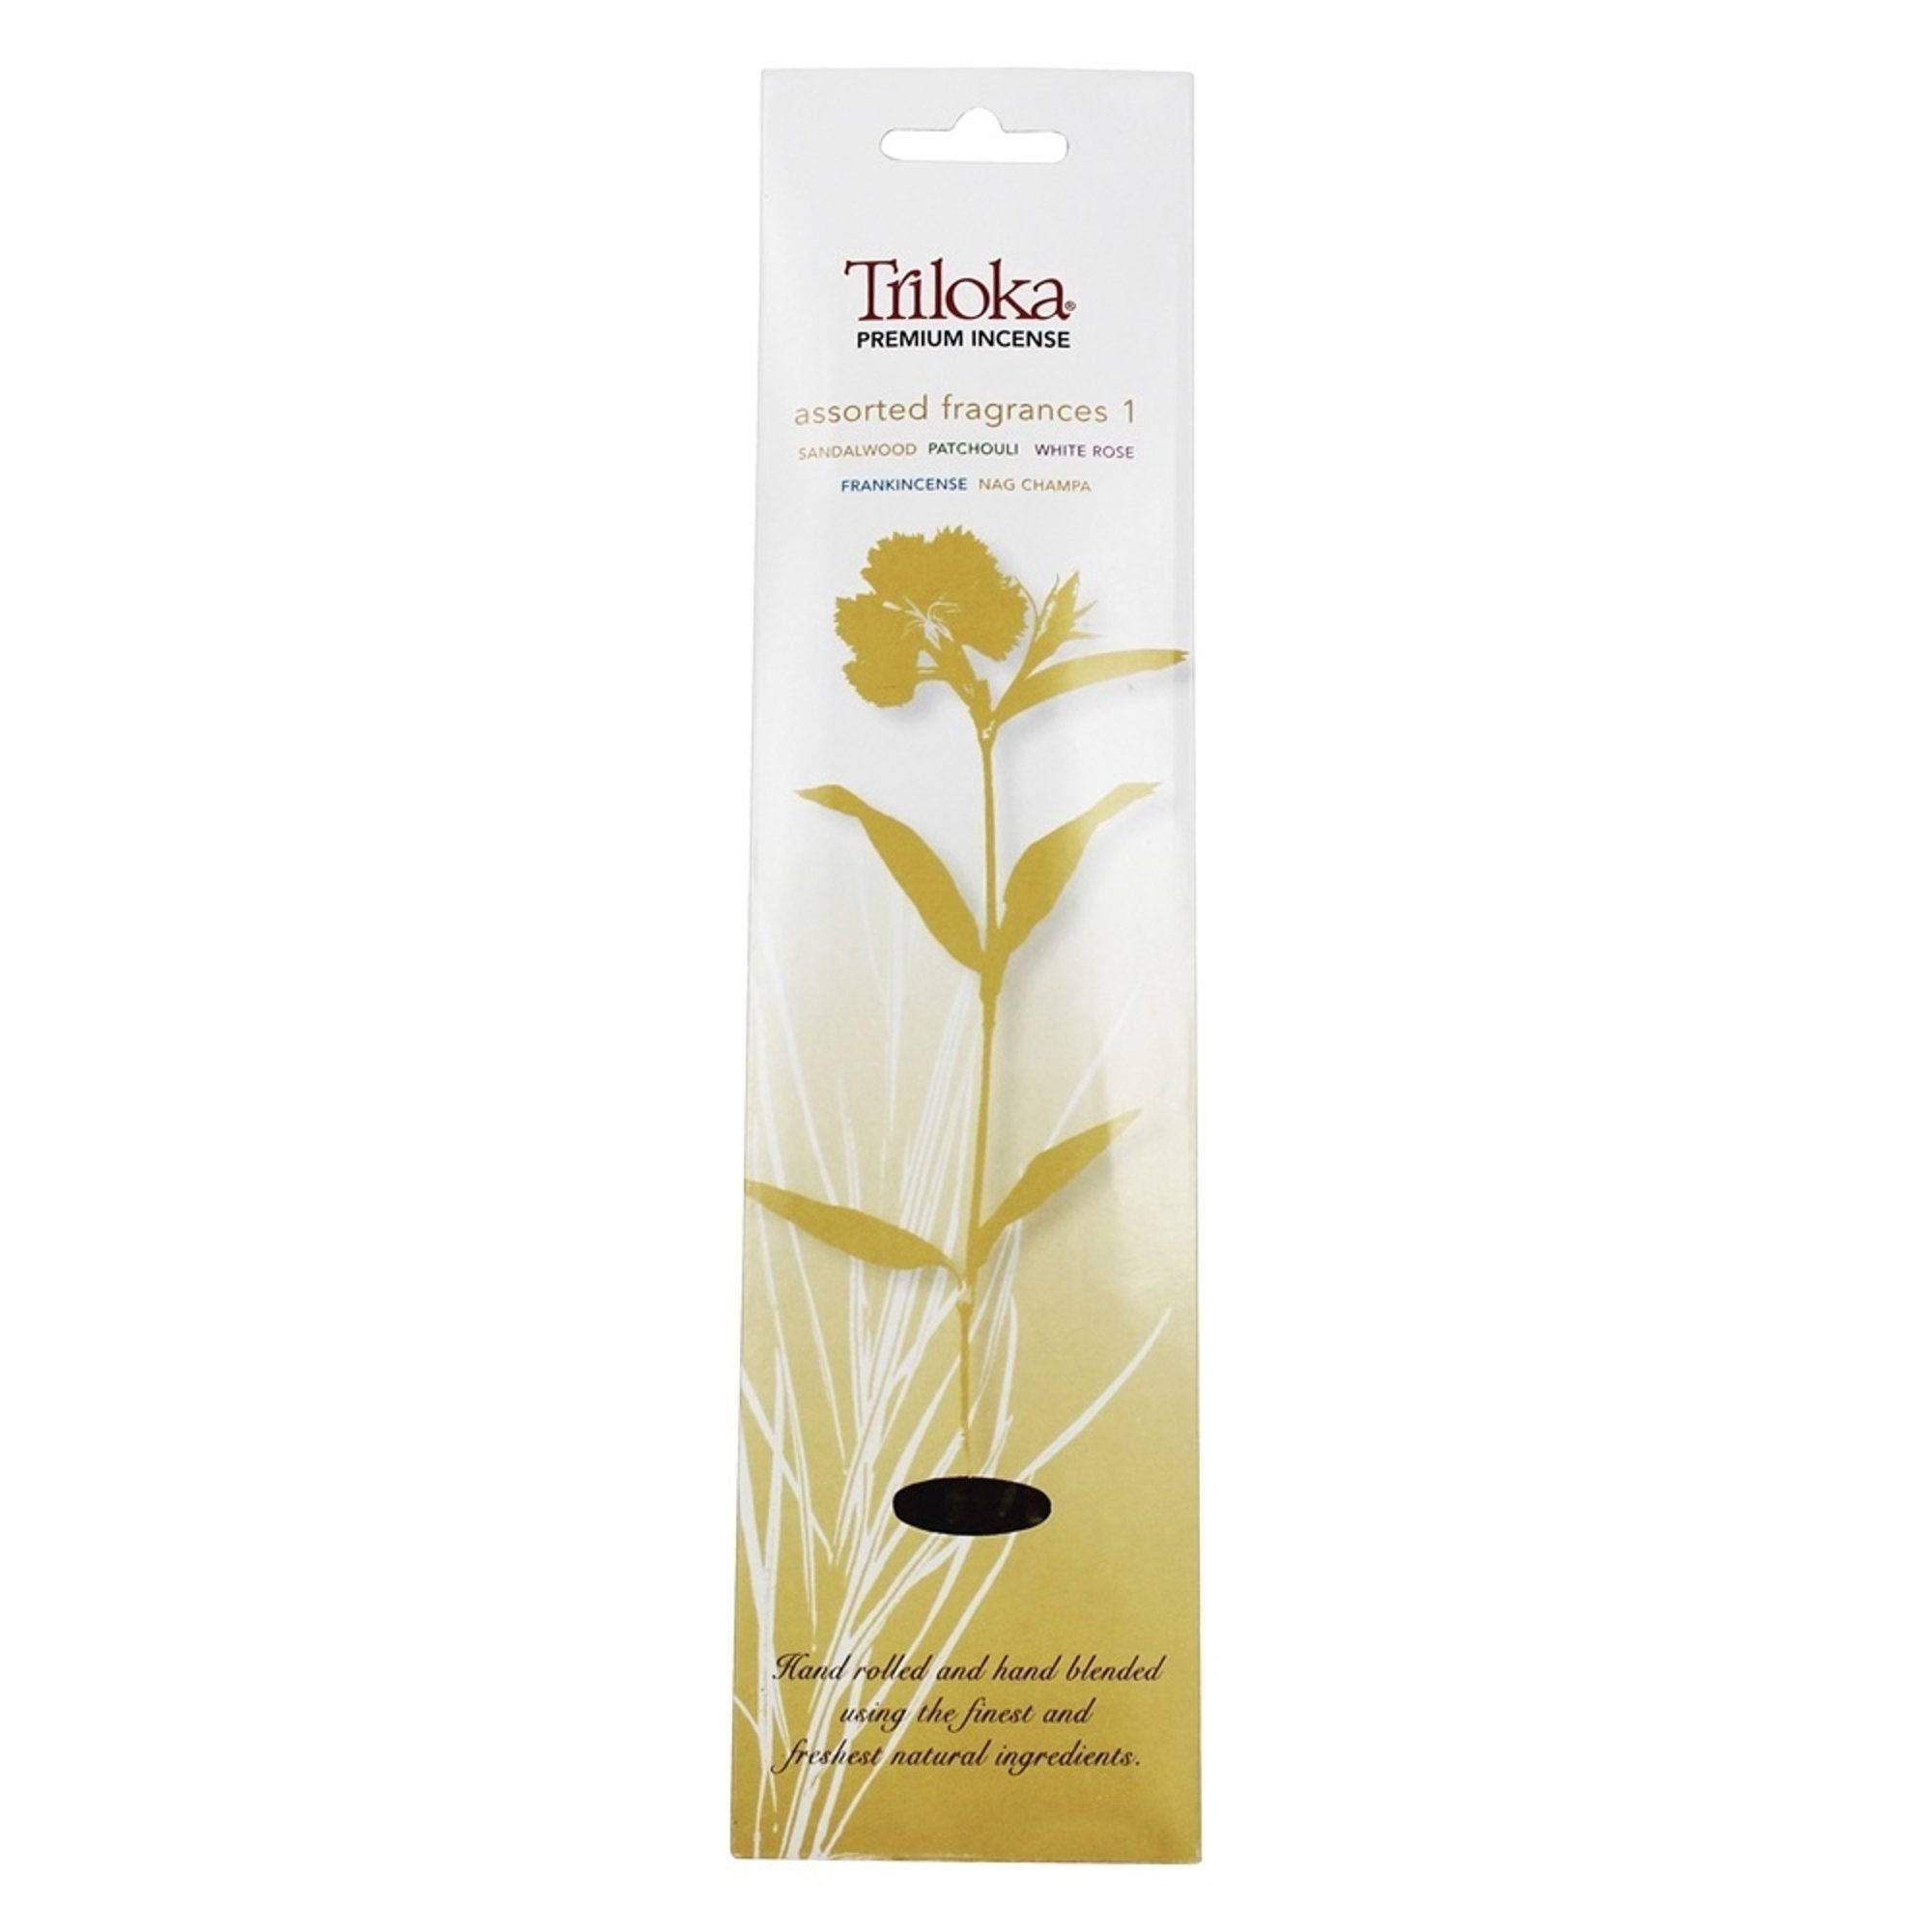 Triloka Premium Incense Assorted Fragrances 1 10 Stick(s)